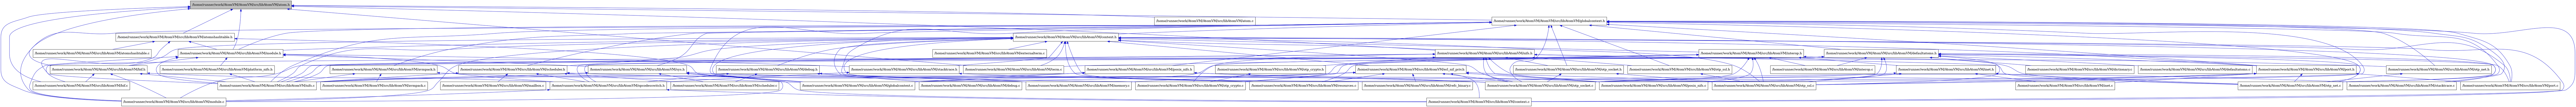 digraph {
    graph [bgcolor="#00000000"]
    node [shape=rectangle style=filled fillcolor="#FFFFFF" font=Helvetica padding=2]
    edge [color="#1414CE"]
    "8" [label="/home/runner/work/AtomVM/AtomVM/src/libAtomVM/bif.c" tooltip="/home/runner/work/AtomVM/AtomVM/src/libAtomVM/bif.c"]
    "50" [label="/home/runner/work/AtomVM/AtomVM/src/libAtomVM/dictionary.c" tooltip="/home/runner/work/AtomVM/AtomVM/src/libAtomVM/dictionary.c"]
    "7" [label="/home/runner/work/AtomVM/AtomVM/src/libAtomVM/bif.h" tooltip="/home/runner/work/AtomVM/AtomVM/src/libAtomVM/bif.h"]
    "13" [label="/home/runner/work/AtomVM/AtomVM/src/libAtomVM/platform_nifs.h" tooltip="/home/runner/work/AtomVM/AtomVM/src/libAtomVM/platform_nifs.h"]
    "2" [label="/home/runner/work/AtomVM/AtomVM/src/libAtomVM/atom.c" tooltip="/home/runner/work/AtomVM/AtomVM/src/libAtomVM/atom.c"]
    "29" [label="/home/runner/work/AtomVM/AtomVM/src/libAtomVM/posix_nifs.c" tooltip="/home/runner/work/AtomVM/AtomVM/src/libAtomVM/posix_nifs.c"]
    "1" [label="/home/runner/work/AtomVM/AtomVM/src/libAtomVM/atom.h" tooltip="/home/runner/work/AtomVM/AtomVM/src/libAtomVM/atom.h" fillcolor="#BFBFBF"]
    "51" [label="/home/runner/work/AtomVM/AtomVM/src/libAtomVM/posix_nifs.h" tooltip="/home/runner/work/AtomVM/AtomVM/src/libAtomVM/posix_nifs.h"]
    "49" [label="/home/runner/work/AtomVM/AtomVM/src/libAtomVM/defaultatoms.c" tooltip="/home/runner/work/AtomVM/AtomVM/src/libAtomVM/defaultatoms.c"]
    "48" [label="/home/runner/work/AtomVM/AtomVM/src/libAtomVM/defaultatoms.h" tooltip="/home/runner/work/AtomVM/AtomVM/src/libAtomVM/defaultatoms.h"]
    "34" [label="/home/runner/work/AtomVM/AtomVM/src/libAtomVM/inet.c" tooltip="/home/runner/work/AtomVM/AtomVM/src/libAtomVM/inet.c"]
    "33" [label="/home/runner/work/AtomVM/AtomVM/src/libAtomVM/inet.h" tooltip="/home/runner/work/AtomVM/AtomVM/src/libAtomVM/inet.h"]
    "19" [label="/home/runner/work/AtomVM/AtomVM/src/libAtomVM/scheduler.c" tooltip="/home/runner/work/AtomVM/AtomVM/src/libAtomVM/scheduler.c"]
    "46" [label="/home/runner/work/AtomVM/AtomVM/src/libAtomVM/scheduler.h" tooltip="/home/runner/work/AtomVM/AtomVM/src/libAtomVM/scheduler.h"]
    "12" [label="/home/runner/work/AtomVM/AtomVM/src/libAtomVM/context.c" tooltip="/home/runner/work/AtomVM/AtomVM/src/libAtomVM/context.c"]
    "23" [label="/home/runner/work/AtomVM/AtomVM/src/libAtomVM/context.h" tooltip="/home/runner/work/AtomVM/AtomVM/src/libAtomVM/context.h"]
    "44" [label="/home/runner/work/AtomVM/AtomVM/src/libAtomVM/port.c" tooltip="/home/runner/work/AtomVM/AtomVM/src/libAtomVM/port.c"]
    "45" [label="/home/runner/work/AtomVM/AtomVM/src/libAtomVM/port.h" tooltip="/home/runner/work/AtomVM/AtomVM/src/libAtomVM/port.h"]
    "15" [label="/home/runner/work/AtomVM/AtomVM/src/libAtomVM/stacktrace.c" tooltip="/home/runner/work/AtomVM/AtomVM/src/libAtomVM/stacktrace.c"]
    "14" [label="/home/runner/work/AtomVM/AtomVM/src/libAtomVM/stacktrace.h" tooltip="/home/runner/work/AtomVM/AtomVM/src/libAtomVM/stacktrace.h"]
    "30" [label="/home/runner/work/AtomVM/AtomVM/src/libAtomVM/refc_binary.c" tooltip="/home/runner/work/AtomVM/AtomVM/src/libAtomVM/refc_binary.c"]
    "47" [label="/home/runner/work/AtomVM/AtomVM/src/libAtomVM/mailbox.c" tooltip="/home/runner/work/AtomVM/AtomVM/src/libAtomVM/mailbox.c"]
    "9" [label="/home/runner/work/AtomVM/AtomVM/src/libAtomVM/module.c" tooltip="/home/runner/work/AtomVM/AtomVM/src/libAtomVM/module.c"]
    "6" [label="/home/runner/work/AtomVM/AtomVM/src/libAtomVM/module.h" tooltip="/home/runner/work/AtomVM/AtomVM/src/libAtomVM/module.h"]
    "22" [label="/home/runner/work/AtomVM/AtomVM/src/libAtomVM/avmpack.c" tooltip="/home/runner/work/AtomVM/AtomVM/src/libAtomVM/avmpack.c"]
    "21" [label="/home/runner/work/AtomVM/AtomVM/src/libAtomVM/avmpack.h" tooltip="/home/runner/work/AtomVM/AtomVM/src/libAtomVM/avmpack.h"]
    "38" [label="/home/runner/work/AtomVM/AtomVM/src/libAtomVM/term.c" tooltip="/home/runner/work/AtomVM/AtomVM/src/libAtomVM/term.c"]
    "36" [label="/home/runner/work/AtomVM/AtomVM/src/libAtomVM/interop.c" tooltip="/home/runner/work/AtomVM/AtomVM/src/libAtomVM/interop.c"]
    "28" [label="/home/runner/work/AtomVM/AtomVM/src/libAtomVM/otp_ssl.c" tooltip="/home/runner/work/AtomVM/AtomVM/src/libAtomVM/otp_ssl.c"]
    "32" [label="/home/runner/work/AtomVM/AtomVM/src/libAtomVM/interop.h" tooltip="/home/runner/work/AtomVM/AtomVM/src/libAtomVM/interop.h"]
    "43" [label="/home/runner/work/AtomVM/AtomVM/src/libAtomVM/otp_ssl.h" tooltip="/home/runner/work/AtomVM/AtomVM/src/libAtomVM/otp_ssl.h"]
    "18" [label="/home/runner/work/AtomVM/AtomVM/src/libAtomVM/resources.c" tooltip="/home/runner/work/AtomVM/AtomVM/src/libAtomVM/resources.c"]
    "37" [label="/home/runner/work/AtomVM/AtomVM/src/libAtomVM/otp_crypto.c" tooltip="/home/runner/work/AtomVM/AtomVM/src/libAtomVM/otp_crypto.c"]
    "40" [label="/home/runner/work/AtomVM/AtomVM/src/libAtomVM/otp_crypto.h" tooltip="/home/runner/work/AtomVM/AtomVM/src/libAtomVM/otp_crypto.h"]
    "35" [label="/home/runner/work/AtomVM/AtomVM/src/libAtomVM/otp_net.c" tooltip="/home/runner/work/AtomVM/AtomVM/src/libAtomVM/otp_net.c"]
    "41" [label="/home/runner/work/AtomVM/AtomVM/src/libAtomVM/otp_net.h" tooltip="/home/runner/work/AtomVM/AtomVM/src/libAtomVM/otp_net.h"]
    "27" [label="/home/runner/work/AtomVM/AtomVM/src/libAtomVM/erl_nif_priv.h" tooltip="/home/runner/work/AtomVM/AtomVM/src/libAtomVM/erl_nif_priv.h"]
    "16" [label="/home/runner/work/AtomVM/AtomVM/src/libAtomVM/sys.h" tooltip="/home/runner/work/AtomVM/AtomVM/src/libAtomVM/sys.h"]
    "4" [label="/home/runner/work/AtomVM/AtomVM/src/libAtomVM/atomshashtable.c" tooltip="/home/runner/work/AtomVM/AtomVM/src/libAtomVM/atomshashtable.c"]
    "3" [label="/home/runner/work/AtomVM/AtomVM/src/libAtomVM/atomshashtable.h" tooltip="/home/runner/work/AtomVM/AtomVM/src/libAtomVM/atomshashtable.h"]
    "10" [label="/home/runner/work/AtomVM/AtomVM/src/libAtomVM/nifs.c" tooltip="/home/runner/work/AtomVM/AtomVM/src/libAtomVM/nifs.c"]
    "39" [label="/home/runner/work/AtomVM/AtomVM/src/libAtomVM/nifs.h" tooltip="/home/runner/work/AtomVM/AtomVM/src/libAtomVM/nifs.h"]
    "11" [label="/home/runner/work/AtomVM/AtomVM/src/libAtomVM/opcodesswitch.h" tooltip="/home/runner/work/AtomVM/AtomVM/src/libAtomVM/opcodesswitch.h"]
    "25" [label="/home/runner/work/AtomVM/AtomVM/src/libAtomVM/debug.c" tooltip="/home/runner/work/AtomVM/AtomVM/src/libAtomVM/debug.c"]
    "24" [label="/home/runner/work/AtomVM/AtomVM/src/libAtomVM/debug.h" tooltip="/home/runner/work/AtomVM/AtomVM/src/libAtomVM/debug.h"]
    "5" [label="/home/runner/work/AtomVM/AtomVM/src/libAtomVM/globalcontext.c" tooltip="/home/runner/work/AtomVM/AtomVM/src/libAtomVM/globalcontext.c"]
    "20" [label="/home/runner/work/AtomVM/AtomVM/src/libAtomVM/globalcontext.h" tooltip="/home/runner/work/AtomVM/AtomVM/src/libAtomVM/globalcontext.h"]
    "26" [label="/home/runner/work/AtomVM/AtomVM/src/libAtomVM/memory.c" tooltip="/home/runner/work/AtomVM/AtomVM/src/libAtomVM/memory.c"]
    "17" [label="/home/runner/work/AtomVM/AtomVM/src/libAtomVM/otp_socket.c" tooltip="/home/runner/work/AtomVM/AtomVM/src/libAtomVM/otp_socket.c"]
    "42" [label="/home/runner/work/AtomVM/AtomVM/src/libAtomVM/otp_socket.h" tooltip="/home/runner/work/AtomVM/AtomVM/src/libAtomVM/otp_socket.h"]
    "31" [label="/home/runner/work/AtomVM/AtomVM/src/libAtomVM/externalterm.c" tooltip="/home/runner/work/AtomVM/AtomVM/src/libAtomVM/externalterm.c"]
    "7" -> "8" [dir=back tooltip="include"]
    "7" -> "9" [dir=back tooltip="include"]
    "7" -> "10" [dir=back tooltip="include"]
    "7" -> "11" [dir=back tooltip="include"]
    "13" -> "10" [dir=back tooltip="include"]
    "1" -> "2" [dir=back tooltip="include"]
    "1" -> "3" [dir=back tooltip="include"]
    "1" -> "8" [dir=back tooltip="include"]
    "1" -> "7" [dir=back tooltip="include"]
    "1" -> "20" [dir=back tooltip="include"]
    "1" -> "9" [dir=back tooltip="include"]
    "1" -> "6" [dir=back tooltip="include"]
    "1" -> "39" [dir=back tooltip="include"]
    "1" -> "38" [dir=back tooltip="include"]
    "51" -> "5" [dir=back tooltip="include"]
    "51" -> "10" [dir=back tooltip="include"]
    "51" -> "17" [dir=back tooltip="include"]
    "51" -> "29" [dir=back tooltip="include"]
    "48" -> "8" [dir=back tooltip="include"]
    "48" -> "49" [dir=back tooltip="include"]
    "48" -> "50" [dir=back tooltip="include"]
    "48" -> "5" [dir=back tooltip="include"]
    "48" -> "36" [dir=back tooltip="include"]
    "48" -> "10" [dir=back tooltip="include"]
    "48" -> "11" [dir=back tooltip="include"]
    "48" -> "37" [dir=back tooltip="include"]
    "48" -> "35" [dir=back tooltip="include"]
    "48" -> "17" [dir=back tooltip="include"]
    "48" -> "28" [dir=back tooltip="include"]
    "48" -> "44" [dir=back tooltip="include"]
    "48" -> "45" [dir=back tooltip="include"]
    "48" -> "29" [dir=back tooltip="include"]
    "48" -> "18" [dir=back tooltip="include"]
    "48" -> "15" [dir=back tooltip="include"]
    "33" -> "34" [dir=back tooltip="include"]
    "33" -> "35" [dir=back tooltip="include"]
    "33" -> "17" [dir=back tooltip="include"]
    "33" -> "28" [dir=back tooltip="include"]
    "46" -> "47" [dir=back tooltip="include"]
    "46" -> "10" [dir=back tooltip="include"]
    "46" -> "11" [dir=back tooltip="include"]
    "46" -> "17" [dir=back tooltip="include"]
    "46" -> "19" [dir=back tooltip="include"]
    "23" -> "7" [dir=back tooltip="include"]
    "23" -> "12" [dir=back tooltip="include"]
    "23" -> "24" [dir=back tooltip="include"]
    "23" -> "27" [dir=back tooltip="include"]
    "23" -> "31" [dir=back tooltip="include"]
    "23" -> "5" [dir=back tooltip="include"]
    "23" -> "32" [dir=back tooltip="include"]
    "23" -> "26" [dir=back tooltip="include"]
    "23" -> "9" [dir=back tooltip="include"]
    "23" -> "6" [dir=back tooltip="include"]
    "23" -> "10" [dir=back tooltip="include"]
    "23" -> "39" [dir=back tooltip="include"]
    "23" -> "37" [dir=back tooltip="include"]
    "23" -> "35" [dir=back tooltip="include"]
    "23" -> "17" [dir=back tooltip="include"]
    "23" -> "28" [dir=back tooltip="include"]
    "23" -> "44" [dir=back tooltip="include"]
    "23" -> "45" [dir=back tooltip="include"]
    "23" -> "30" [dir=back tooltip="include"]
    "23" -> "18" [dir=back tooltip="include"]
    "23" -> "46" [dir=back tooltip="include"]
    "23" -> "14" [dir=back tooltip="include"]
    "23" -> "38" [dir=back tooltip="include"]
    "45" -> "34" [dir=back tooltip="include"]
    "45" -> "10" [dir=back tooltip="include"]
    "45" -> "35" [dir=back tooltip="include"]
    "45" -> "17" [dir=back tooltip="include"]
    "45" -> "28" [dir=back tooltip="include"]
    "45" -> "44" [dir=back tooltip="include"]
    "14" -> "11" [dir=back tooltip="include"]
    "14" -> "15" [dir=back tooltip="include"]
    "6" -> "7" [dir=back tooltip="include"]
    "6" -> "9" [dir=back tooltip="include"]
    "6" -> "10" [dir=back tooltip="include"]
    "6" -> "11" [dir=back tooltip="include"]
    "6" -> "13" [dir=back tooltip="include"]
    "6" -> "14" [dir=back tooltip="include"]
    "6" -> "16" [dir=back tooltip="include"]
    "21" -> "22" [dir=back tooltip="include"]
    "21" -> "5" [dir=back tooltip="include"]
    "21" -> "10" [dir=back tooltip="include"]
    "32" -> "33" [dir=back tooltip="include"]
    "32" -> "36" [dir=back tooltip="include"]
    "32" -> "10" [dir=back tooltip="include"]
    "32" -> "37" [dir=back tooltip="include"]
    "32" -> "35" [dir=back tooltip="include"]
    "32" -> "17" [dir=back tooltip="include"]
    "32" -> "28" [dir=back tooltip="include"]
    "32" -> "29" [dir=back tooltip="include"]
    "32" -> "38" [dir=back tooltip="include"]
    "43" -> "28" [dir=back tooltip="include"]
    "40" -> "37" [dir=back tooltip="include"]
    "41" -> "35" [dir=back tooltip="include"]
    "27" -> "12" [dir=back tooltip="include"]
    "27" -> "5" [dir=back tooltip="include"]
    "27" -> "26" [dir=back tooltip="include"]
    "27" -> "17" [dir=back tooltip="include"]
    "27" -> "28" [dir=back tooltip="include"]
    "27" -> "29" [dir=back tooltip="include"]
    "27" -> "30" [dir=back tooltip="include"]
    "27" -> "18" [dir=back tooltip="include"]
    "16" -> "12" [dir=back tooltip="include"]
    "16" -> "5" [dir=back tooltip="include"]
    "16" -> "9" [dir=back tooltip="include"]
    "16" -> "10" [dir=back tooltip="include"]
    "16" -> "17" [dir=back tooltip="include"]
    "16" -> "18" [dir=back tooltip="include"]
    "16" -> "19" [dir=back tooltip="include"]
    "3" -> "4" [dir=back tooltip="include"]
    "3" -> "5" [dir=back tooltip="include"]
    "3" -> "6" [dir=back tooltip="include"]
    "3" -> "10" [dir=back tooltip="include"]
    "39" -> "9" [dir=back tooltip="include"]
    "39" -> "10" [dir=back tooltip="include"]
    "39" -> "11" [dir=back tooltip="include"]
    "39" -> "37" [dir=back tooltip="include"]
    "39" -> "40" [dir=back tooltip="include"]
    "39" -> "35" [dir=back tooltip="include"]
    "39" -> "41" [dir=back tooltip="include"]
    "39" -> "17" [dir=back tooltip="include"]
    "39" -> "42" [dir=back tooltip="include"]
    "39" -> "28" [dir=back tooltip="include"]
    "39" -> "43" [dir=back tooltip="include"]
    "39" -> "29" [dir=back tooltip="include"]
    "11" -> "12" [dir=back tooltip="include"]
    "11" -> "9" [dir=back tooltip="include"]
    "24" -> "25" [dir=back tooltip="include"]
    "24" -> "26" [dir=back tooltip="include"]
    "24" -> "11" [dir=back tooltip="include"]
    "24" -> "19" [dir=back tooltip="include"]
    "20" -> "21" [dir=back tooltip="include"]
    "20" -> "12" [dir=back tooltip="include"]
    "20" -> "23" [dir=back tooltip="include"]
    "20" -> "48" [dir=back tooltip="include"]
    "20" -> "5" [dir=back tooltip="include"]
    "20" -> "9" [dir=back tooltip="include"]
    "20" -> "6" [dir=back tooltip="include"]
    "20" -> "10" [dir=back tooltip="include"]
    "20" -> "37" [dir=back tooltip="include"]
    "20" -> "35" [dir=back tooltip="include"]
    "20" -> "41" [dir=back tooltip="include"]
    "20" -> "17" [dir=back tooltip="include"]
    "20" -> "42" [dir=back tooltip="include"]
    "20" -> "28" [dir=back tooltip="include"]
    "20" -> "43" [dir=back tooltip="include"]
    "20" -> "44" [dir=back tooltip="include"]
    "20" -> "45" [dir=back tooltip="include"]
    "20" -> "29" [dir=back tooltip="include"]
    "20" -> "51" [dir=back tooltip="include"]
    "20" -> "46" [dir=back tooltip="include"]
    "20" -> "15" [dir=back tooltip="include"]
    "20" -> "16" [dir=back tooltip="include"]
    "42" -> "17" [dir=back tooltip="include"]
    "42" -> "28" [dir=back tooltip="include"]
}